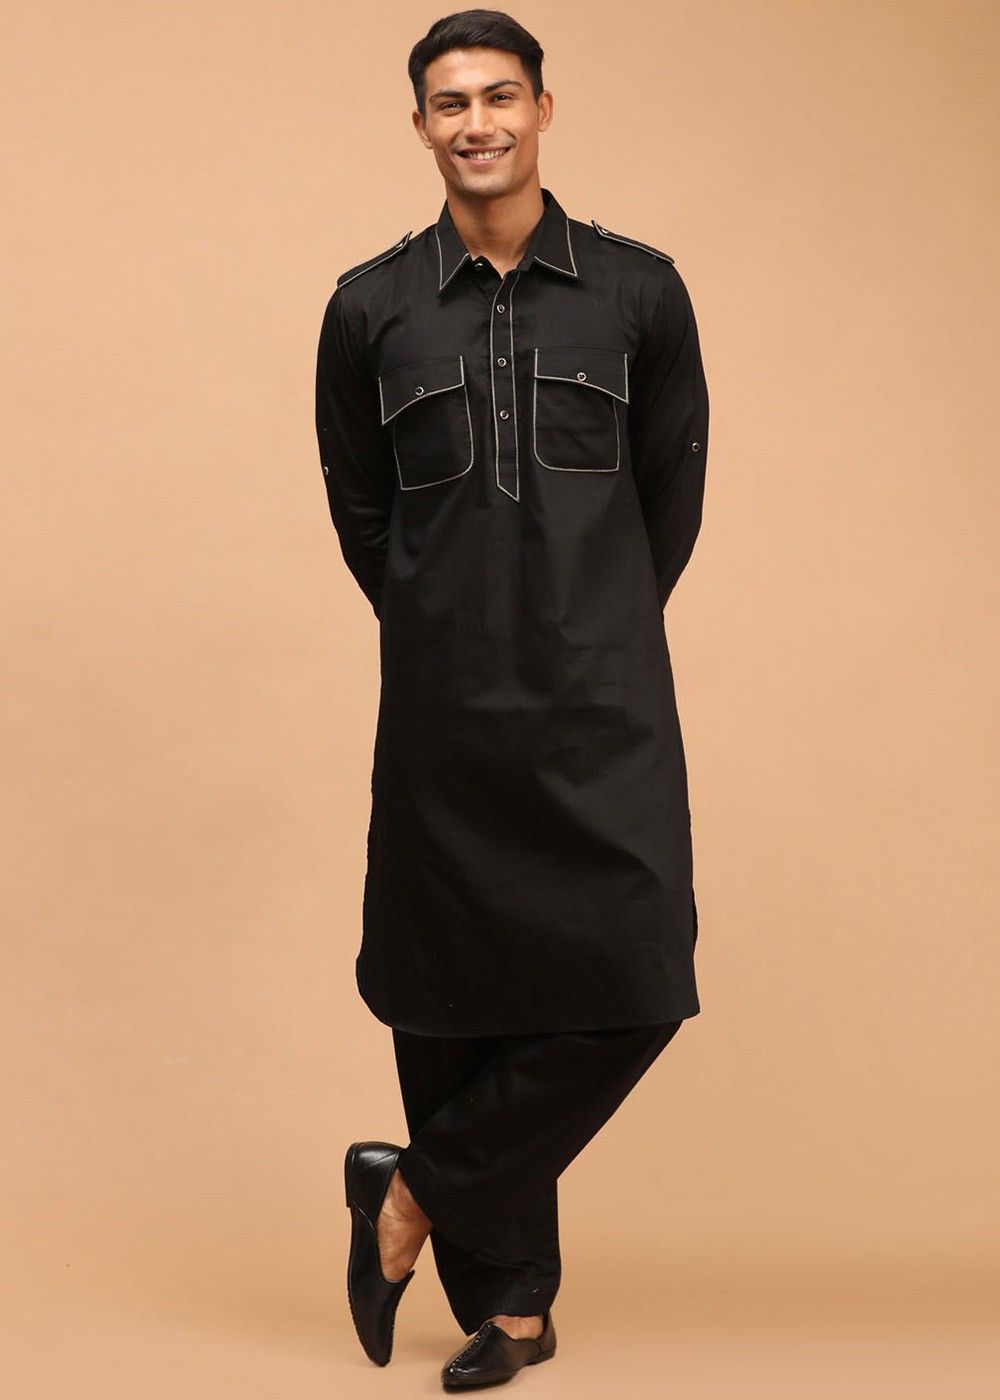 Buy Royal Kurta Mens Cotton Pathani Suit Set Black 38 at Amazon.in